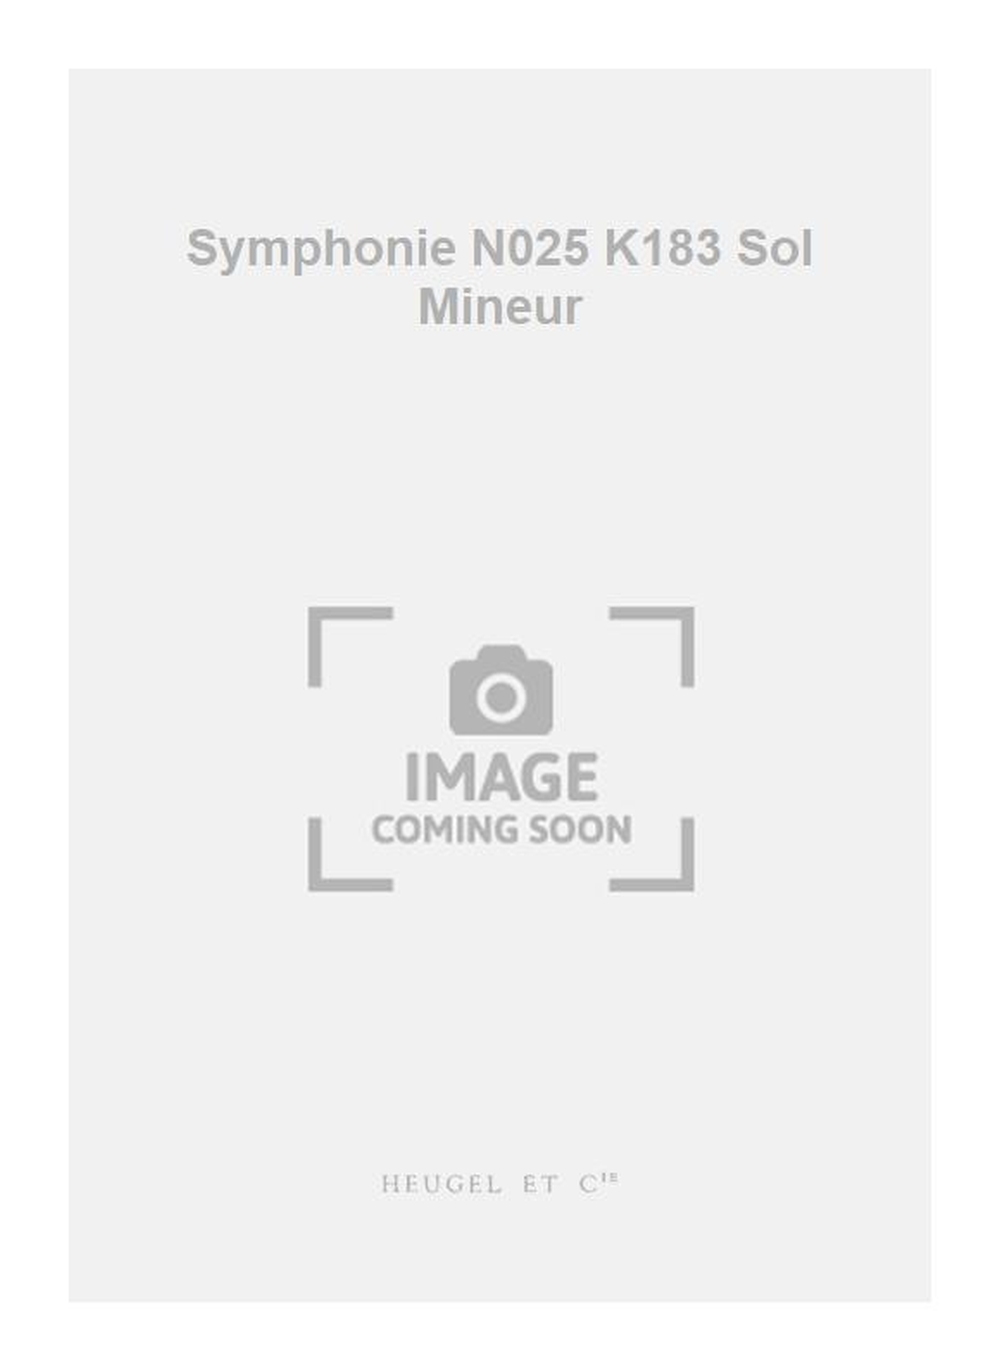 Wolfgang Amadeus Mozart: Symphonie N025 K183 Sol Mineur